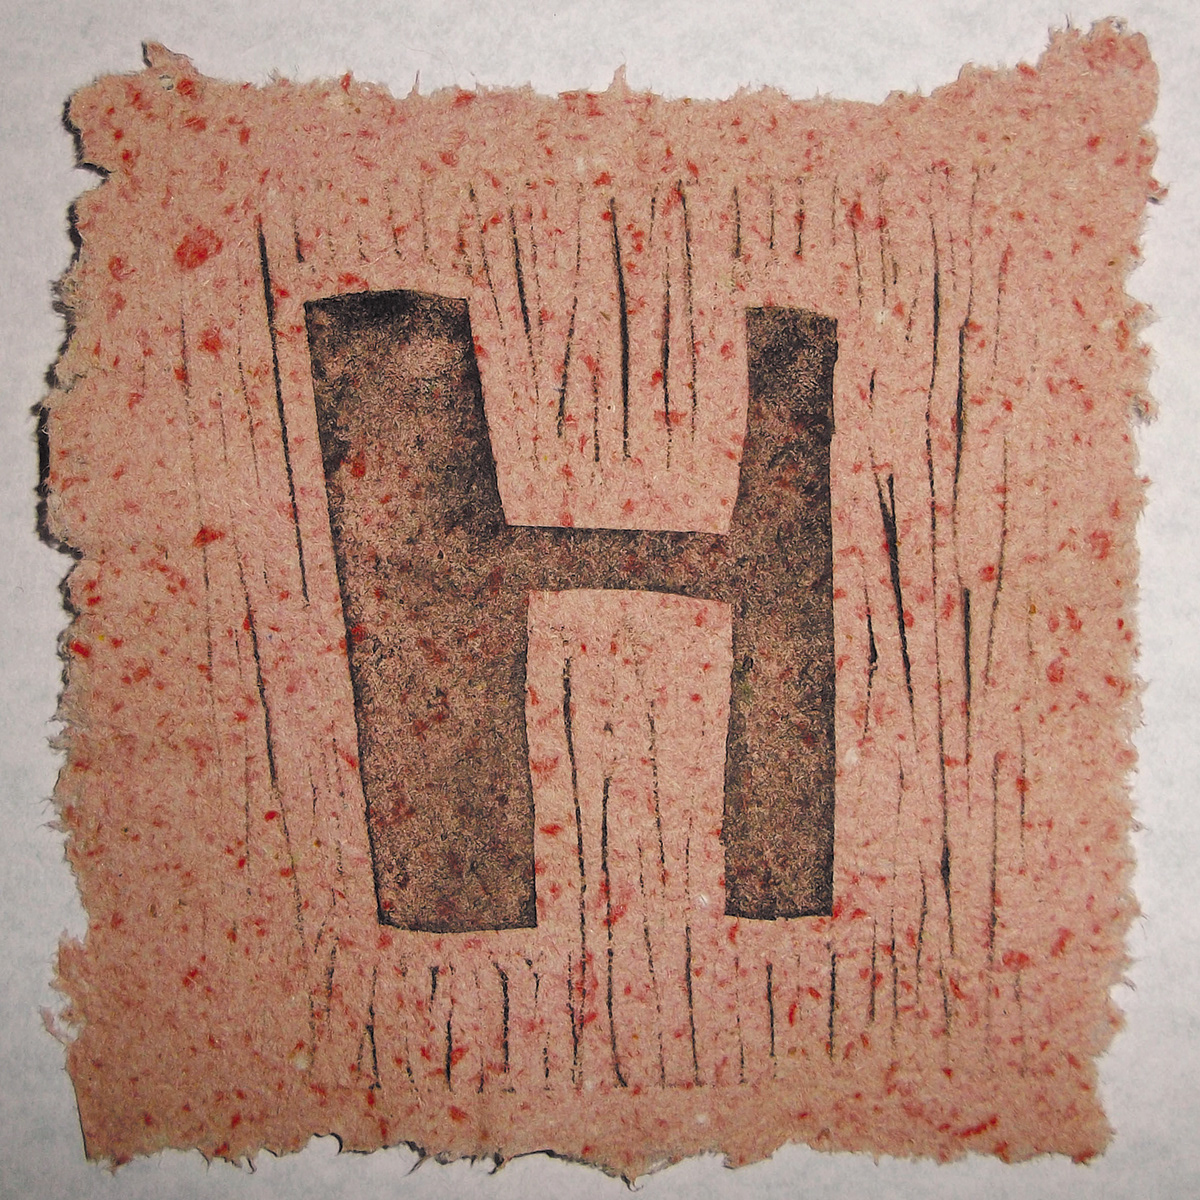 linocut do not handmade paper engraving print